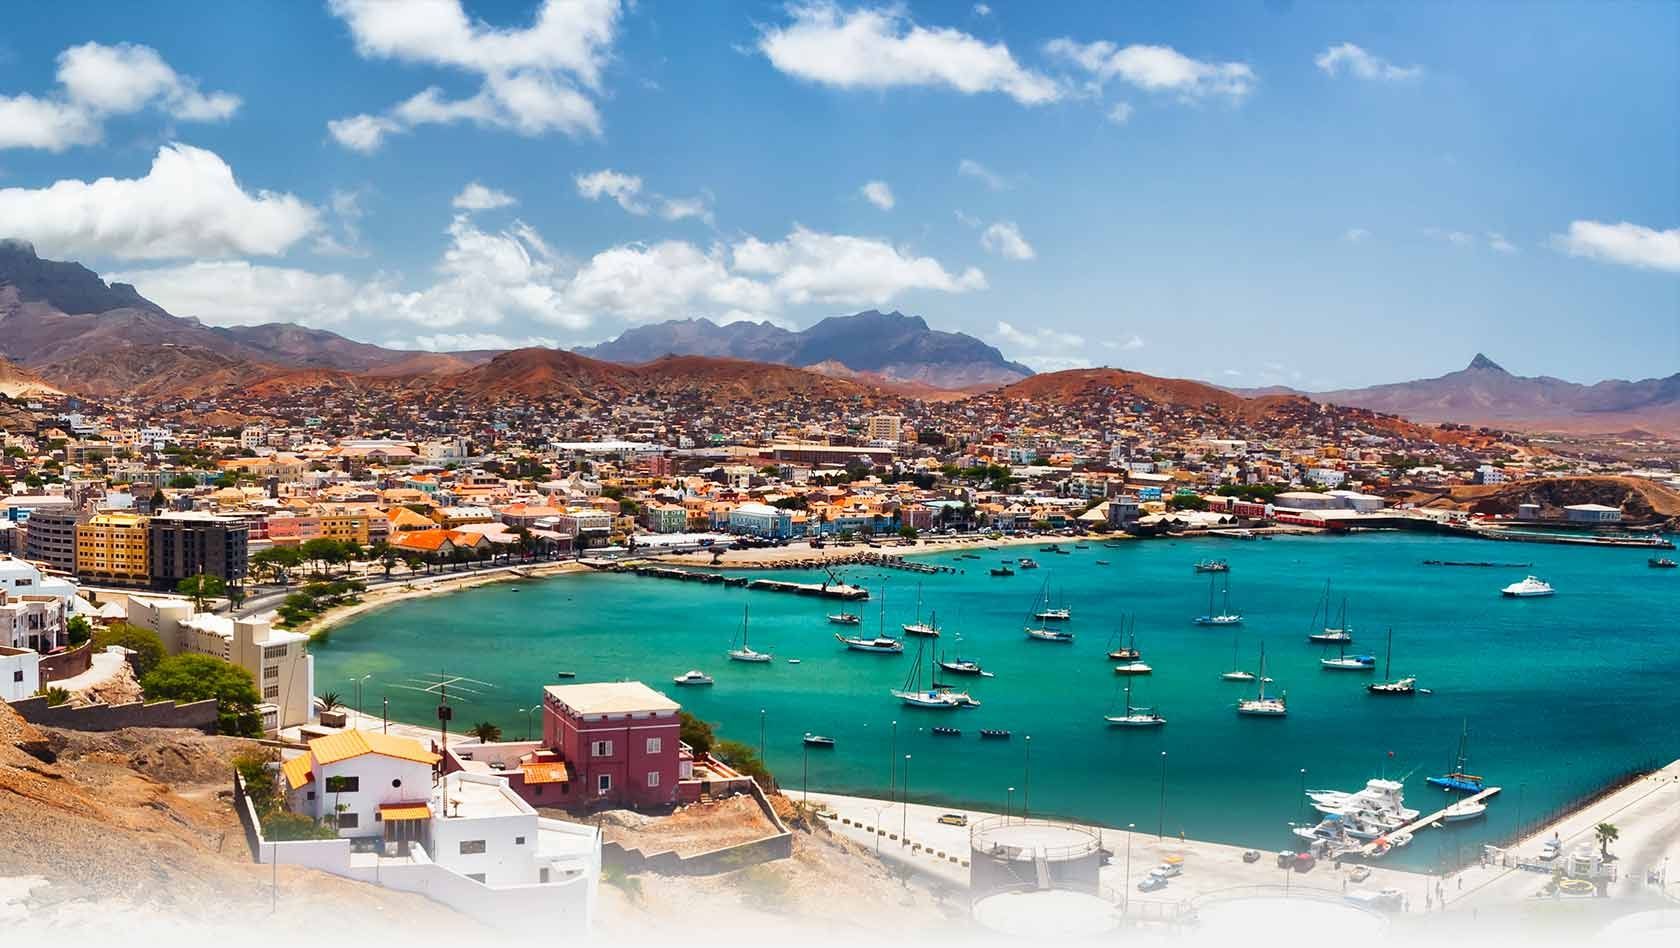 Cape Verde - Visa free for Nigerians, Green passport friendly destinations